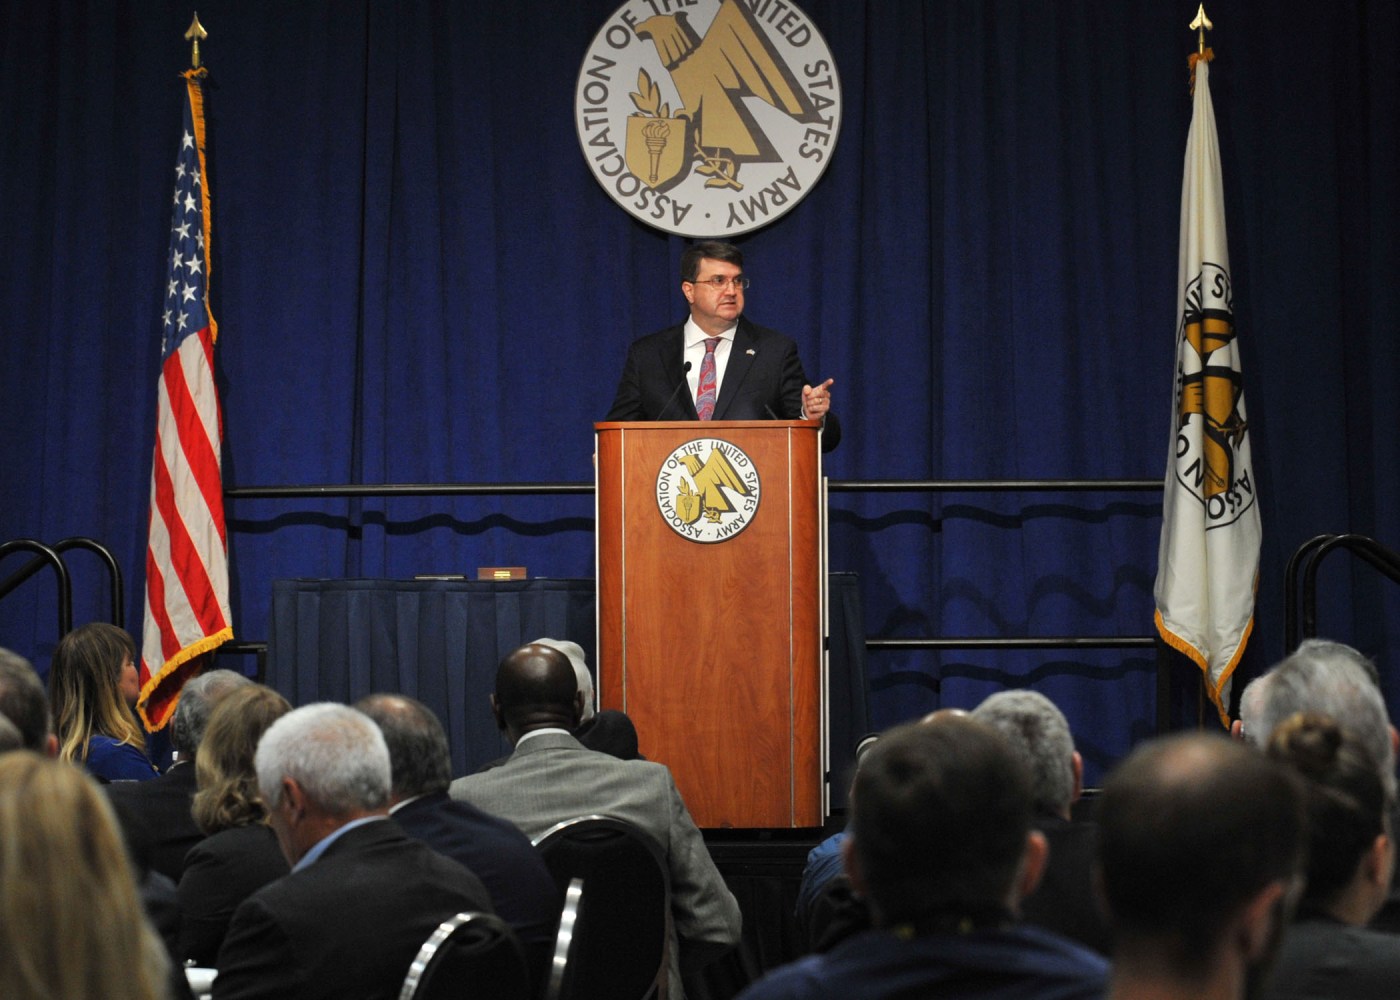 Veterans getting better care through partnerships, says VA secretary